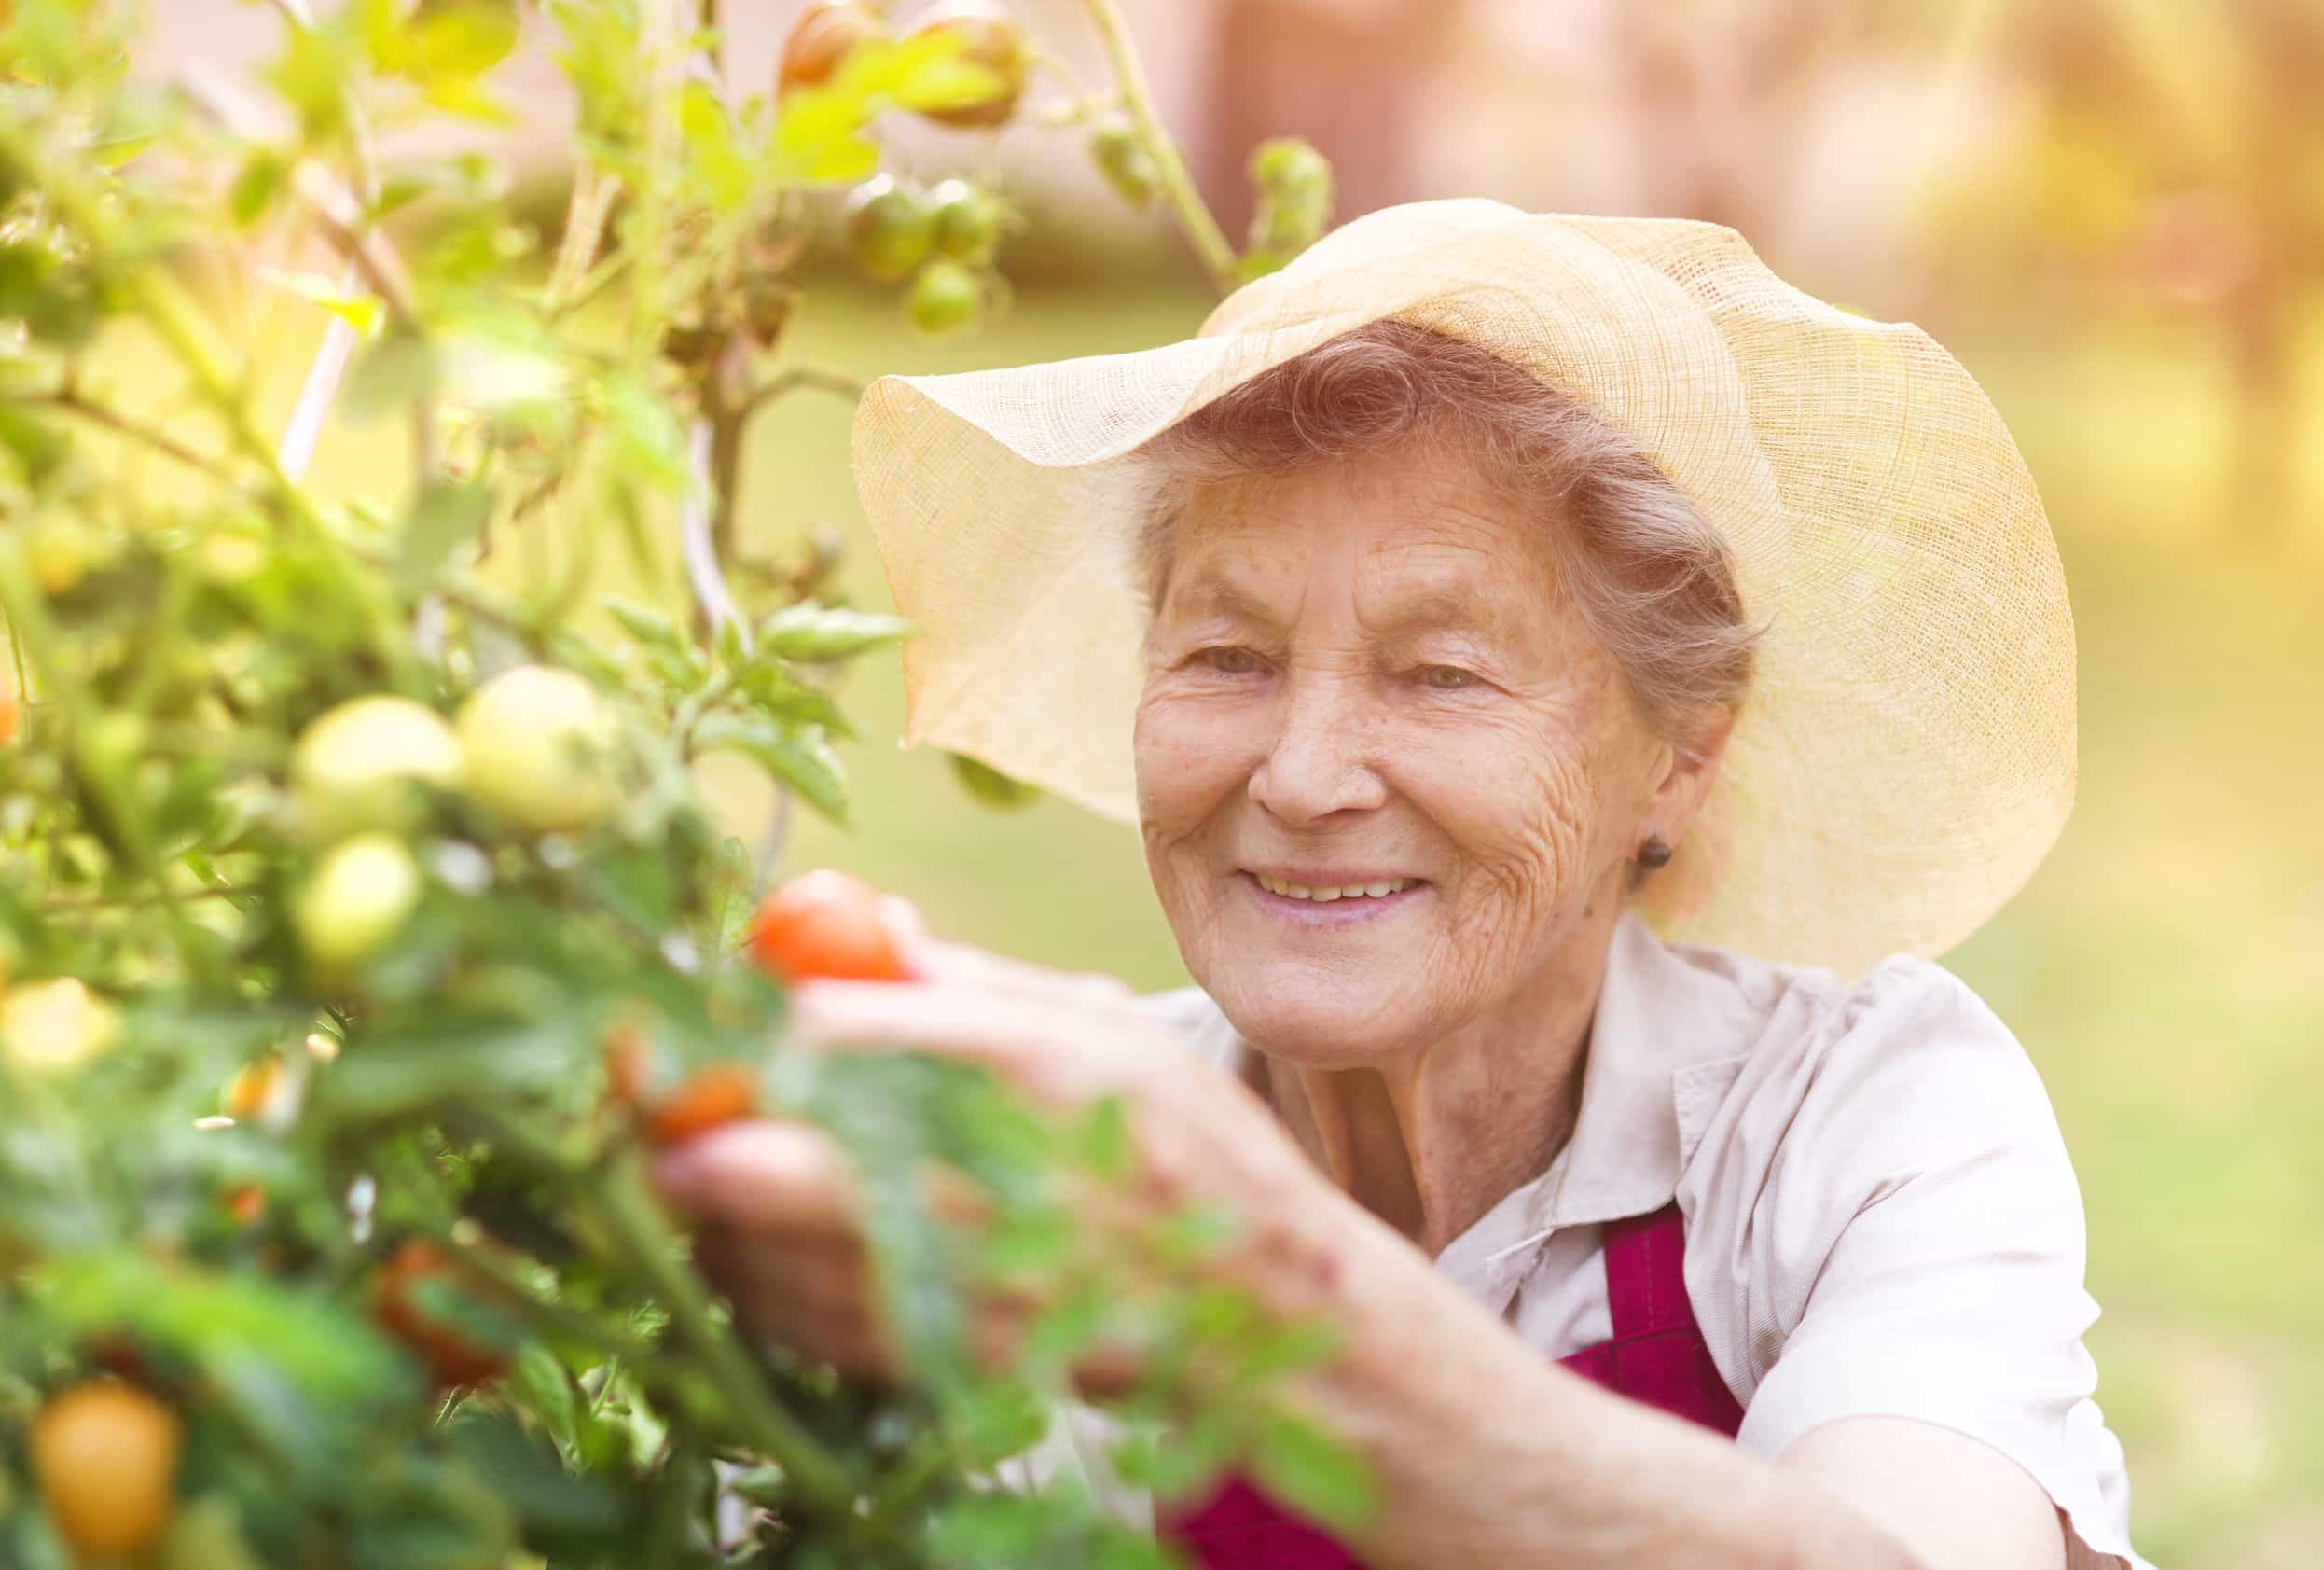 45175997 - senior woman in her garden harvesting tomatoes